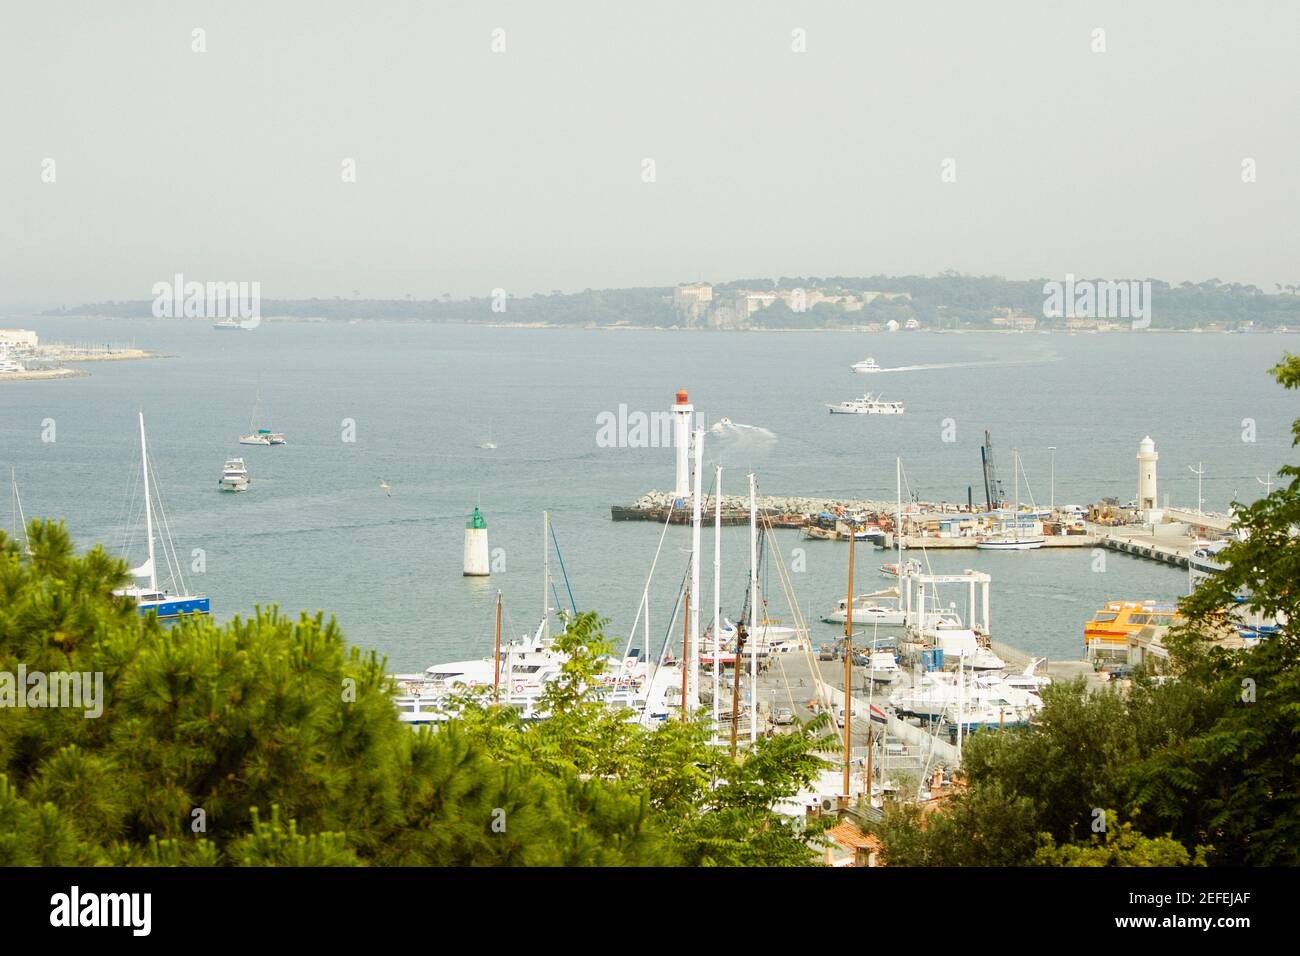 High angle view of ships at a harbor, Vieux Port, Cote dÅ½Azur, Cannes, Provence Alpes Cote DÅ½Azur, France Stock Photo